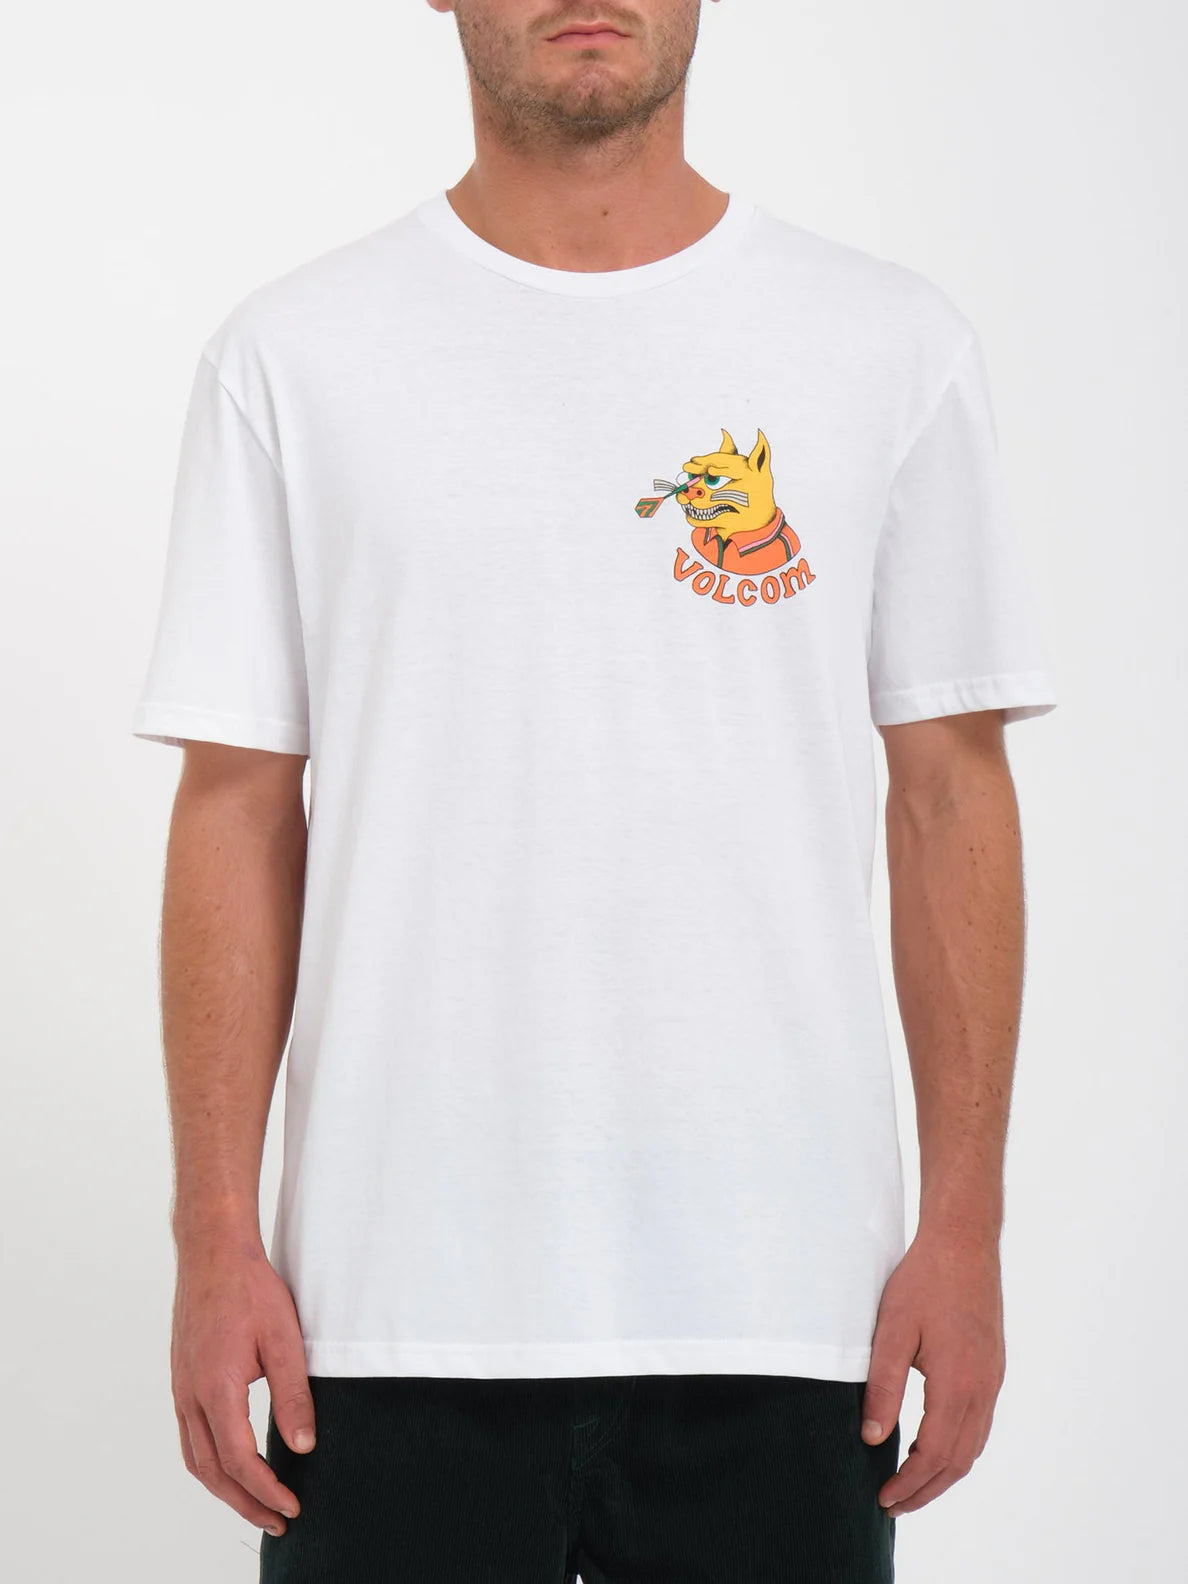 Camiseta Volcom Nando Von Arb - White | Camisetas de hombre | Camisetas manga corta de hombre | Volcom Shop | surfdevils.com